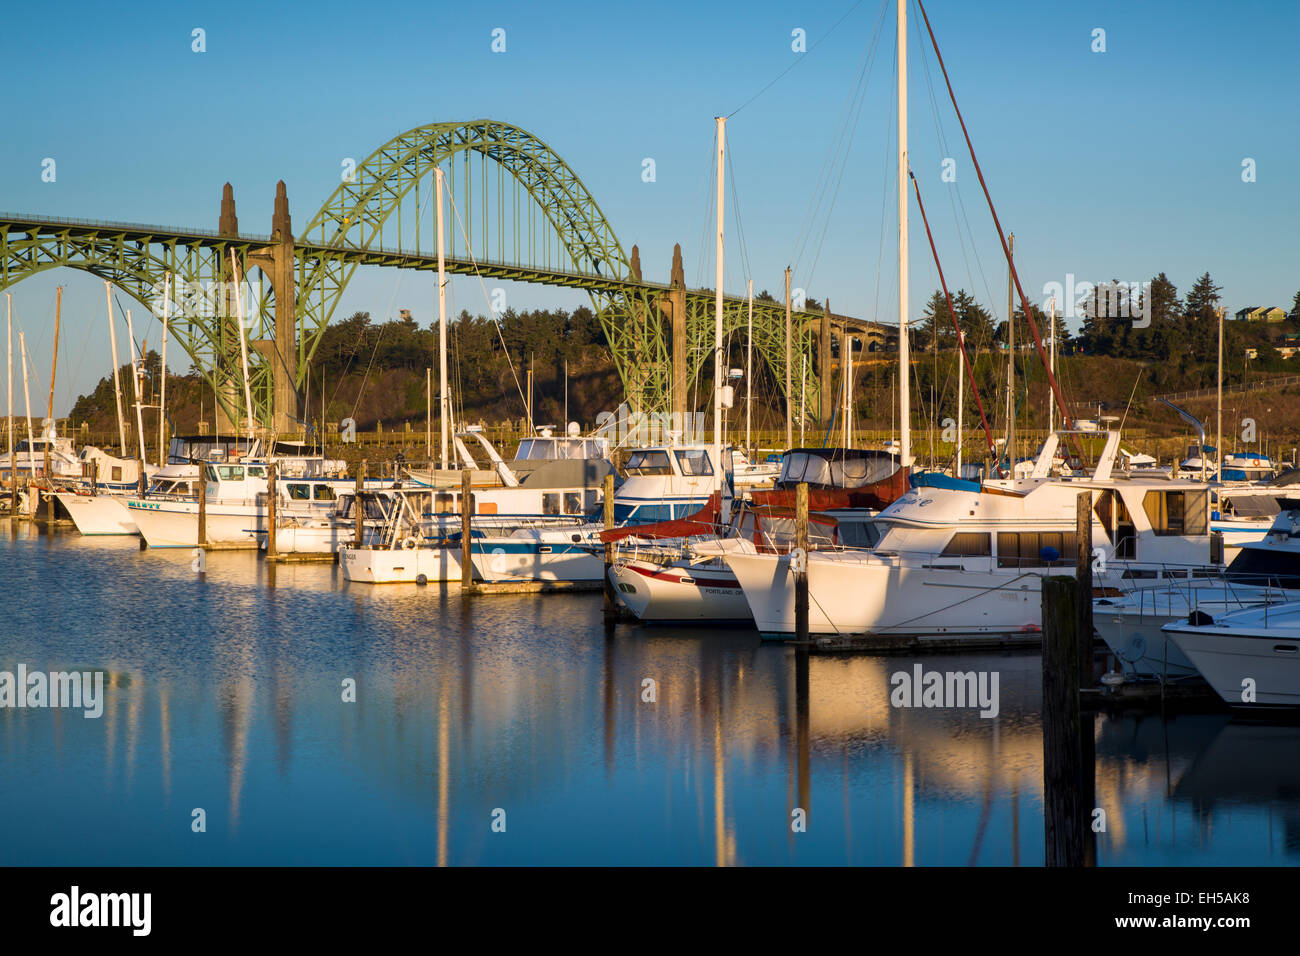 Morgendämmerung in Newport Harbor mit Yaquina Bay Bridge über Newport, Oregon, USA Stockfoto